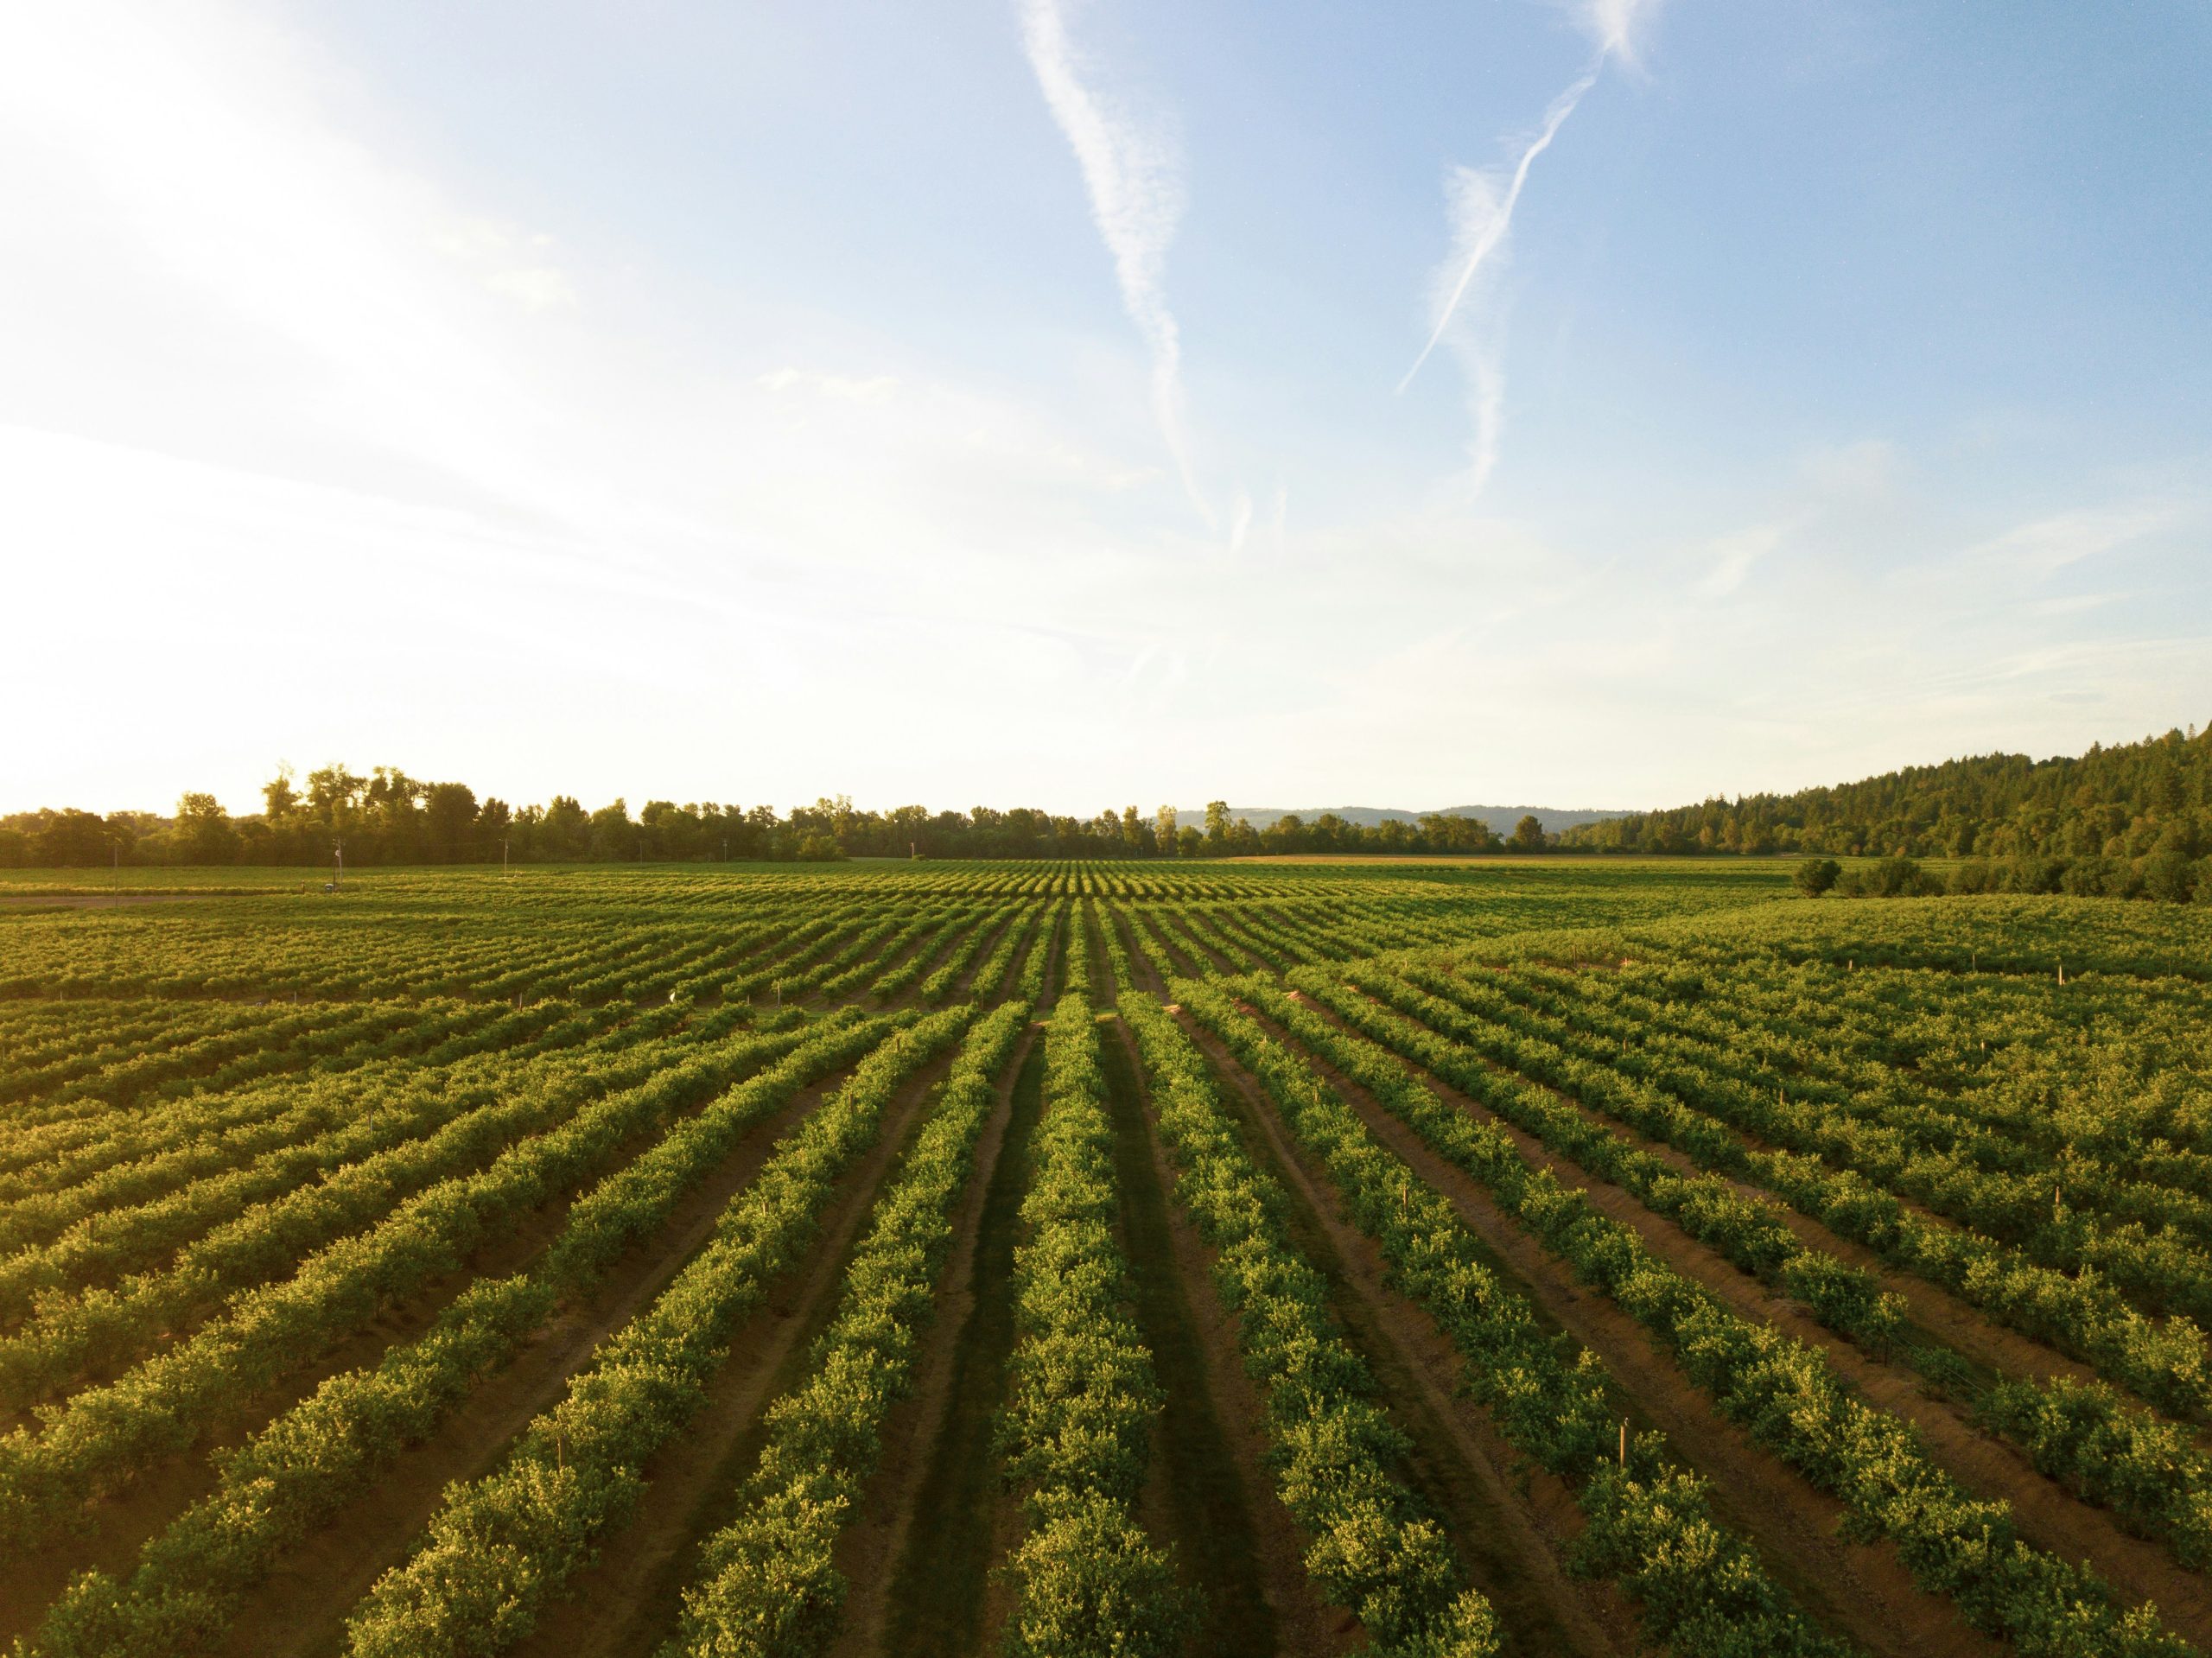 Agriculture – a new dawn emerging? – Tim Jones